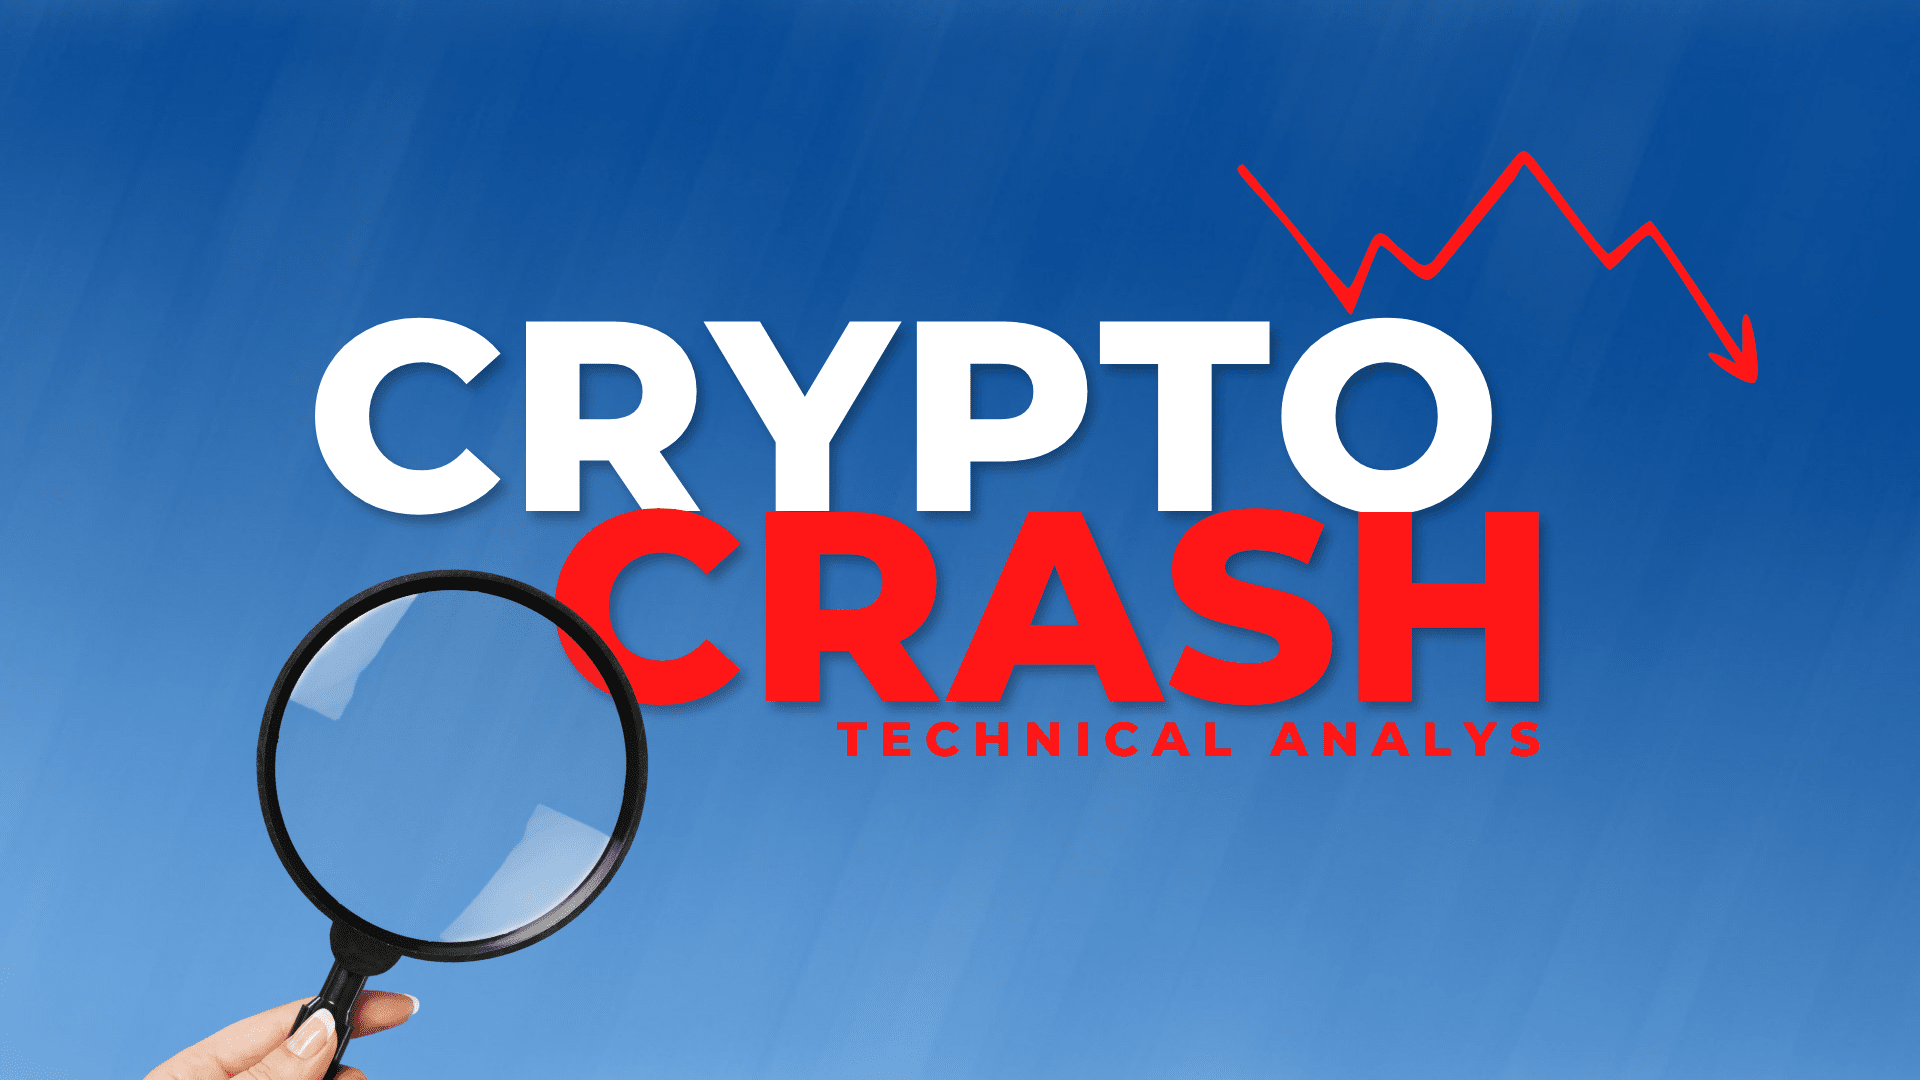 CRYPTO MARKET CRASH - Technical Analysis